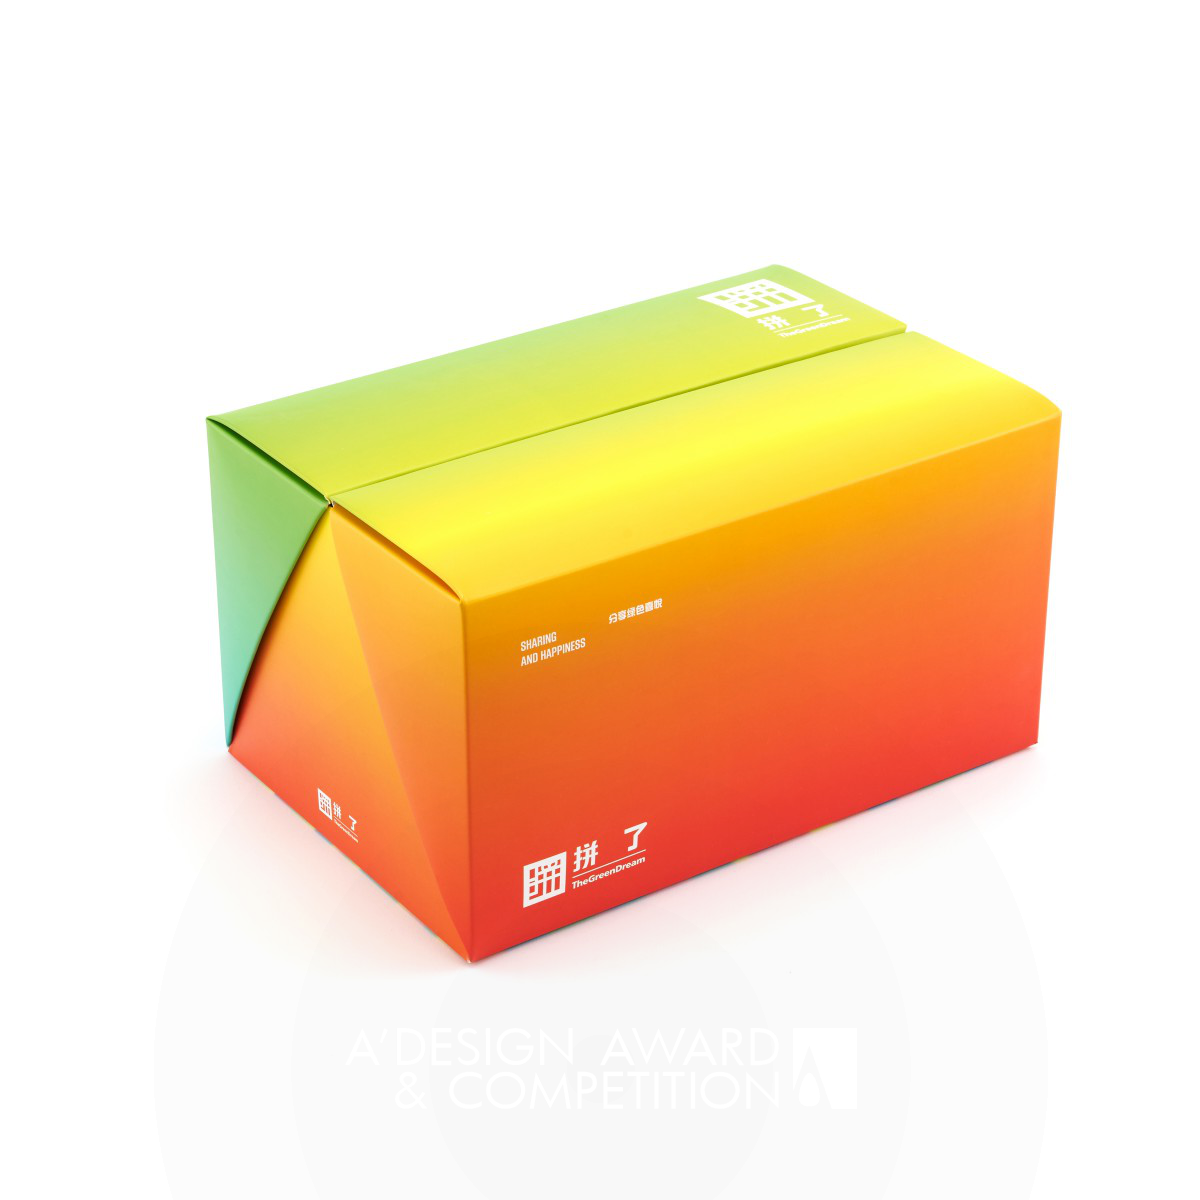 The Box Brand Design Ltd. plant packaging